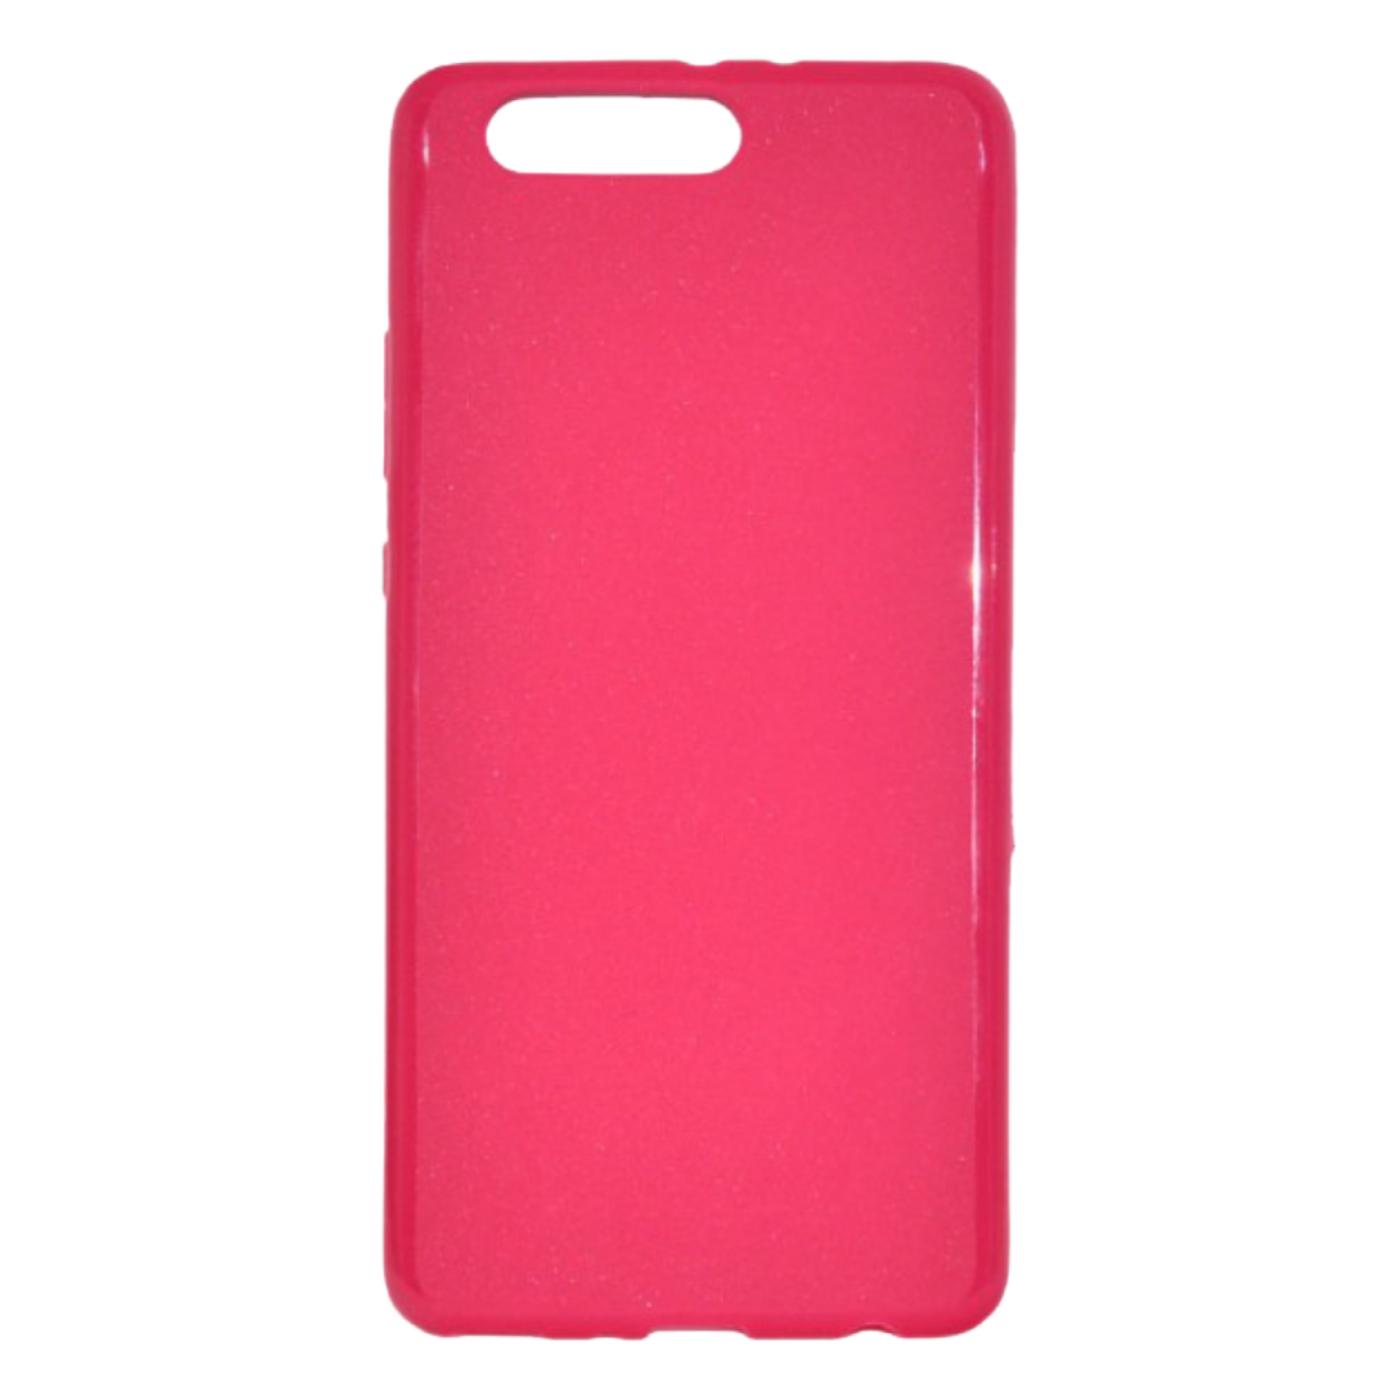 Futrola za mobitel Huawei P8 lite, silikonska, pink